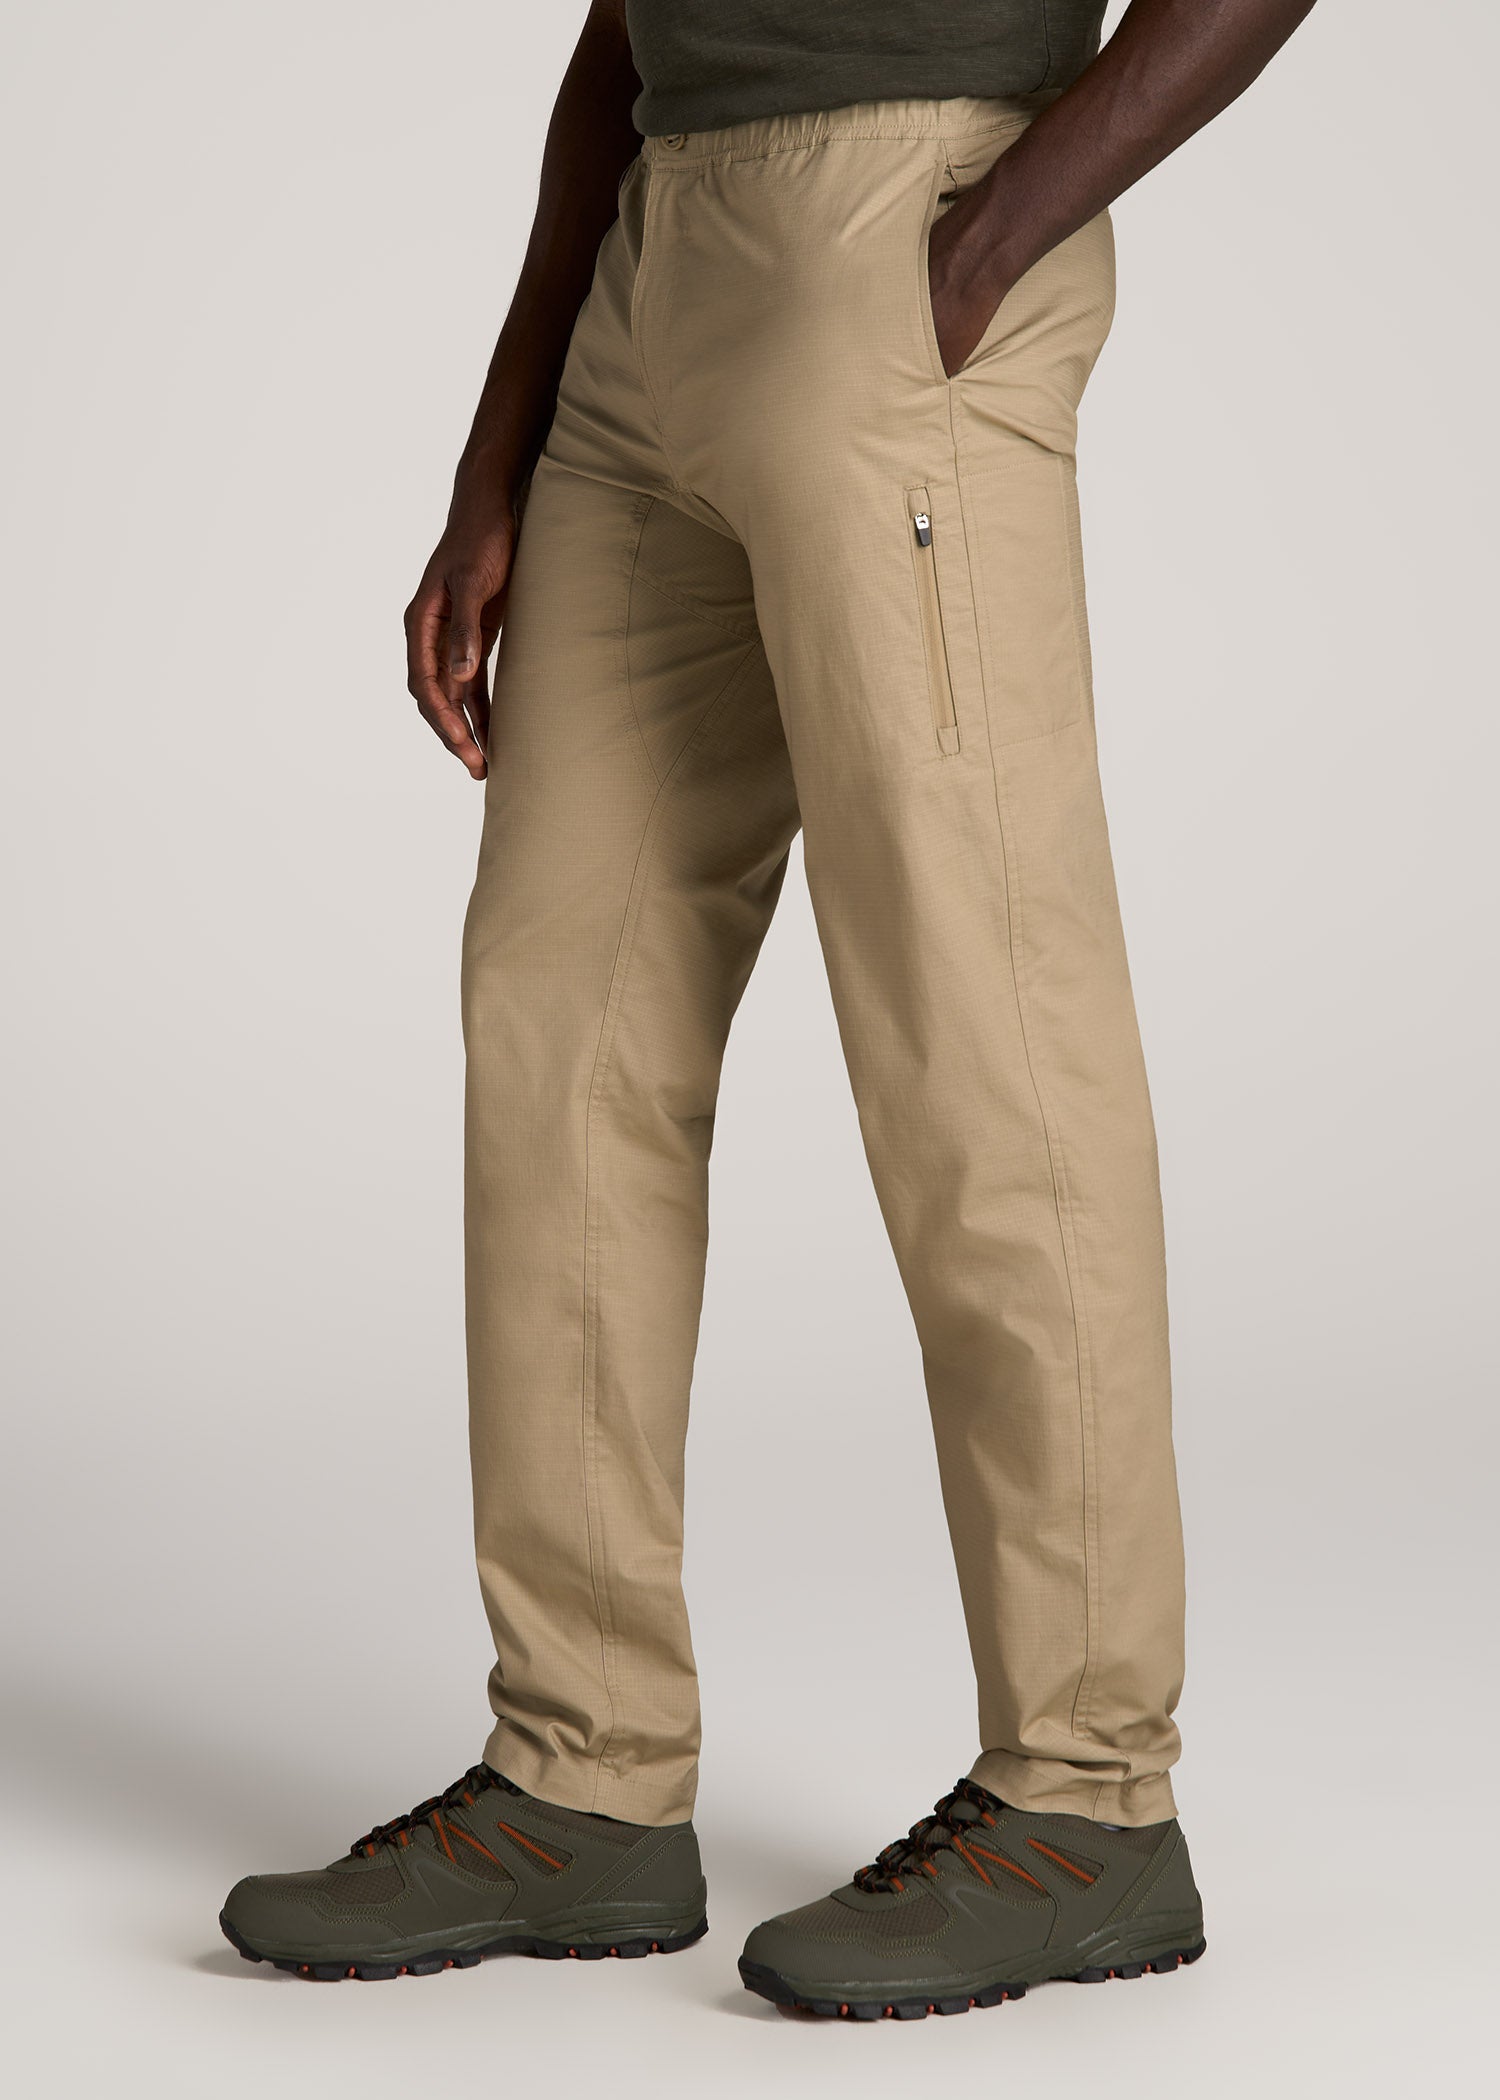 Vedolay Cargo Pants Men Plus Size Mens Cargo Joggers with Zipper Pockets  Full Elastic Waist Cargo Pants Relaxed Fit Lightweight Work Ripstop Pants,Khaki  M - Walmart.com